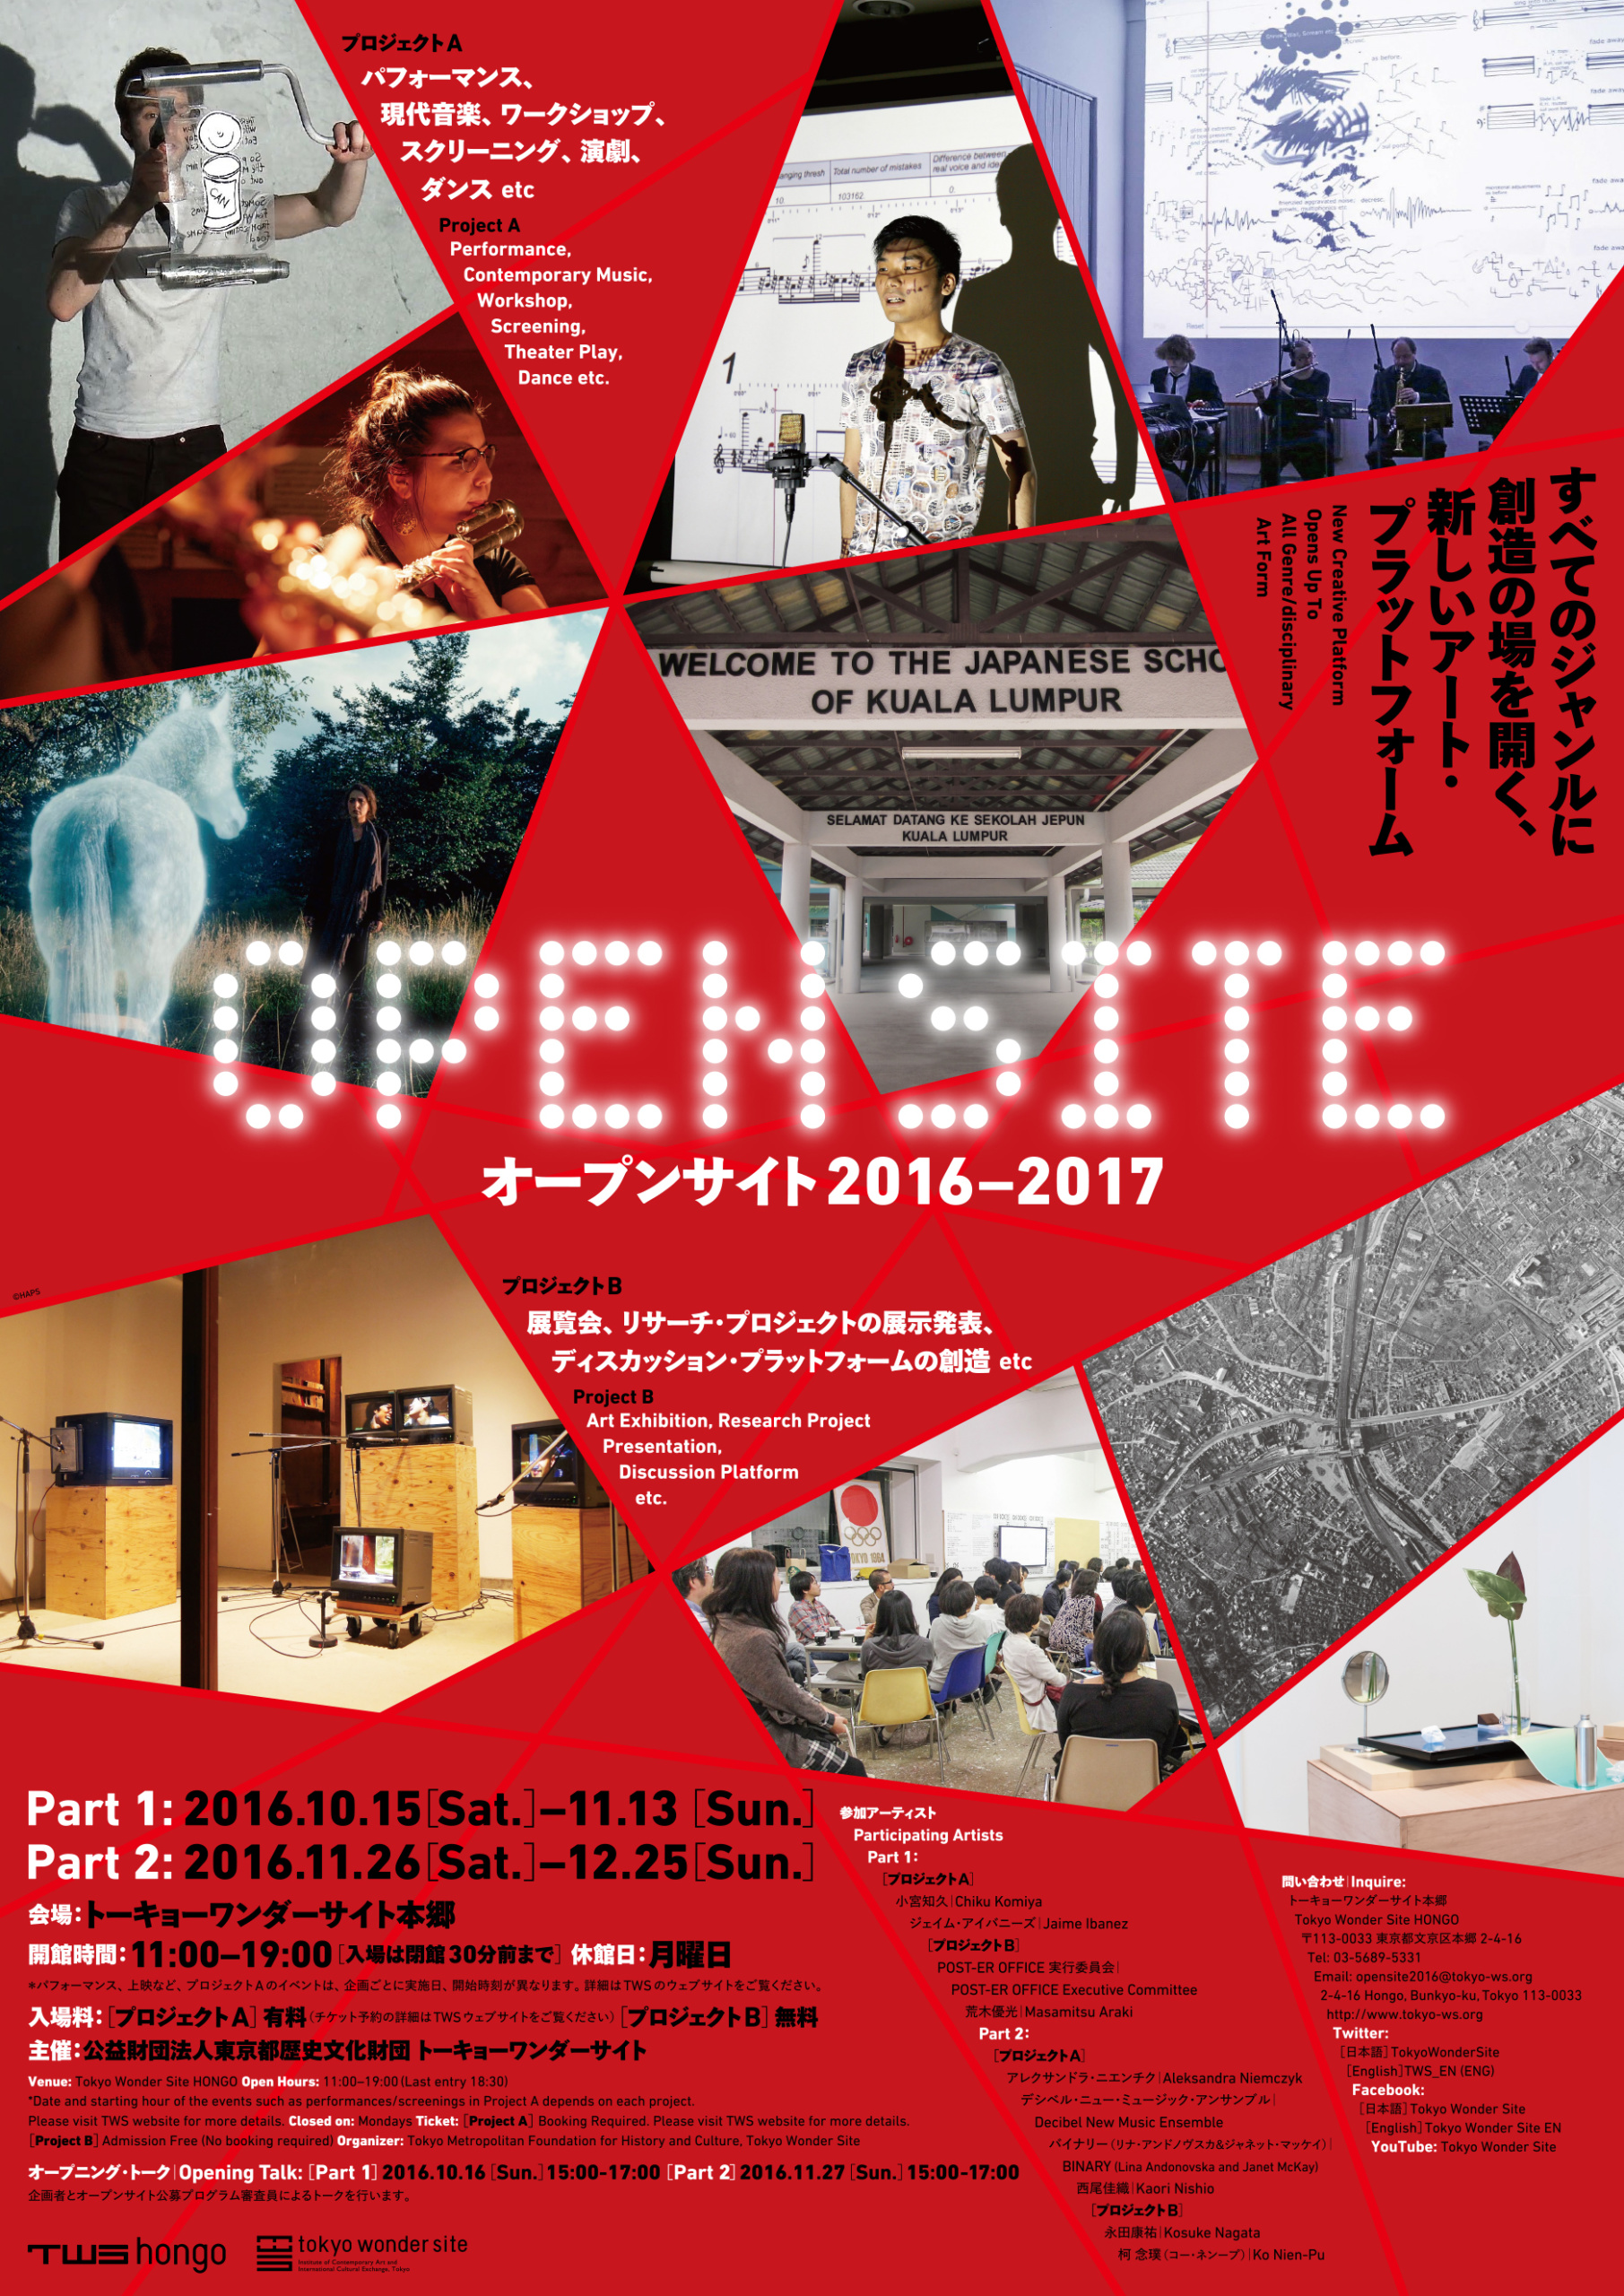 opensite2021_poster_再入稿1002のコピー